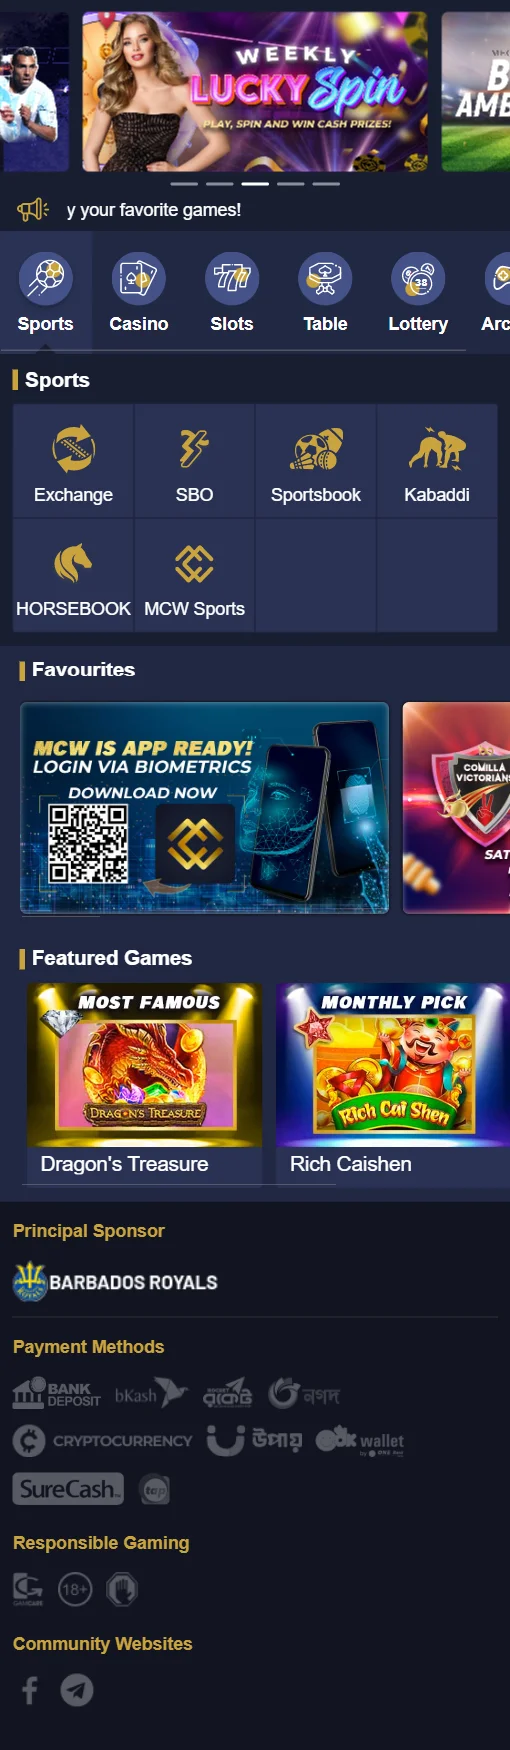 Mega Casino World Bangladesh Play Online Casino at the Best Gambling Site